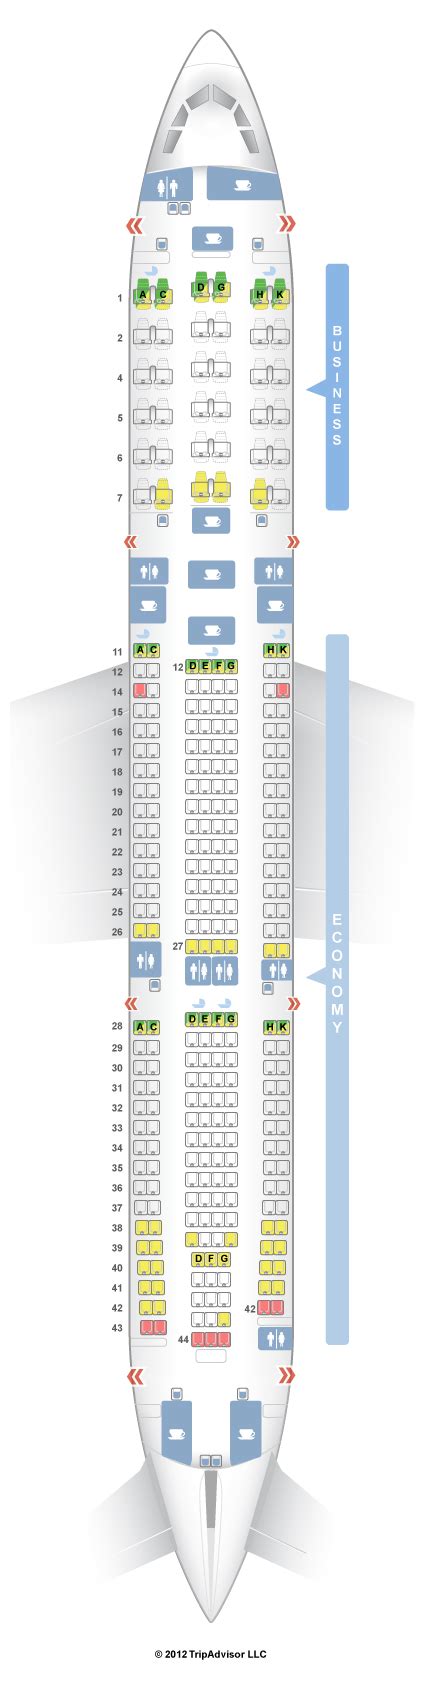 Seatguru Seat Map Malaysia Airlines Airbus A Malaysia Airlines Seatguru Airlines